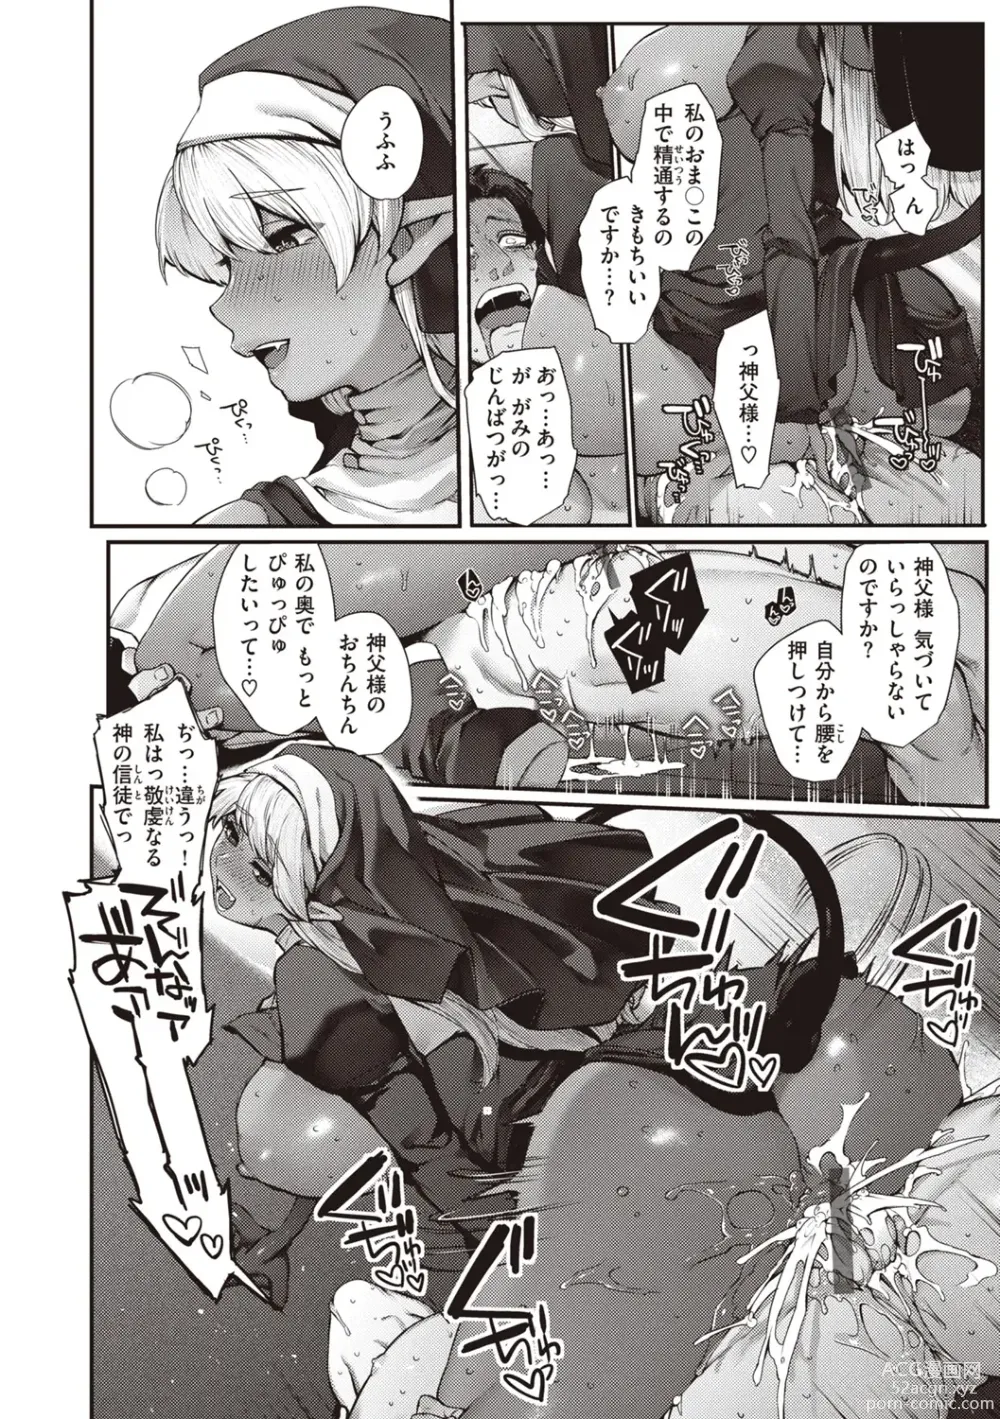 Page 164 of manga DA-DA-MO-RE